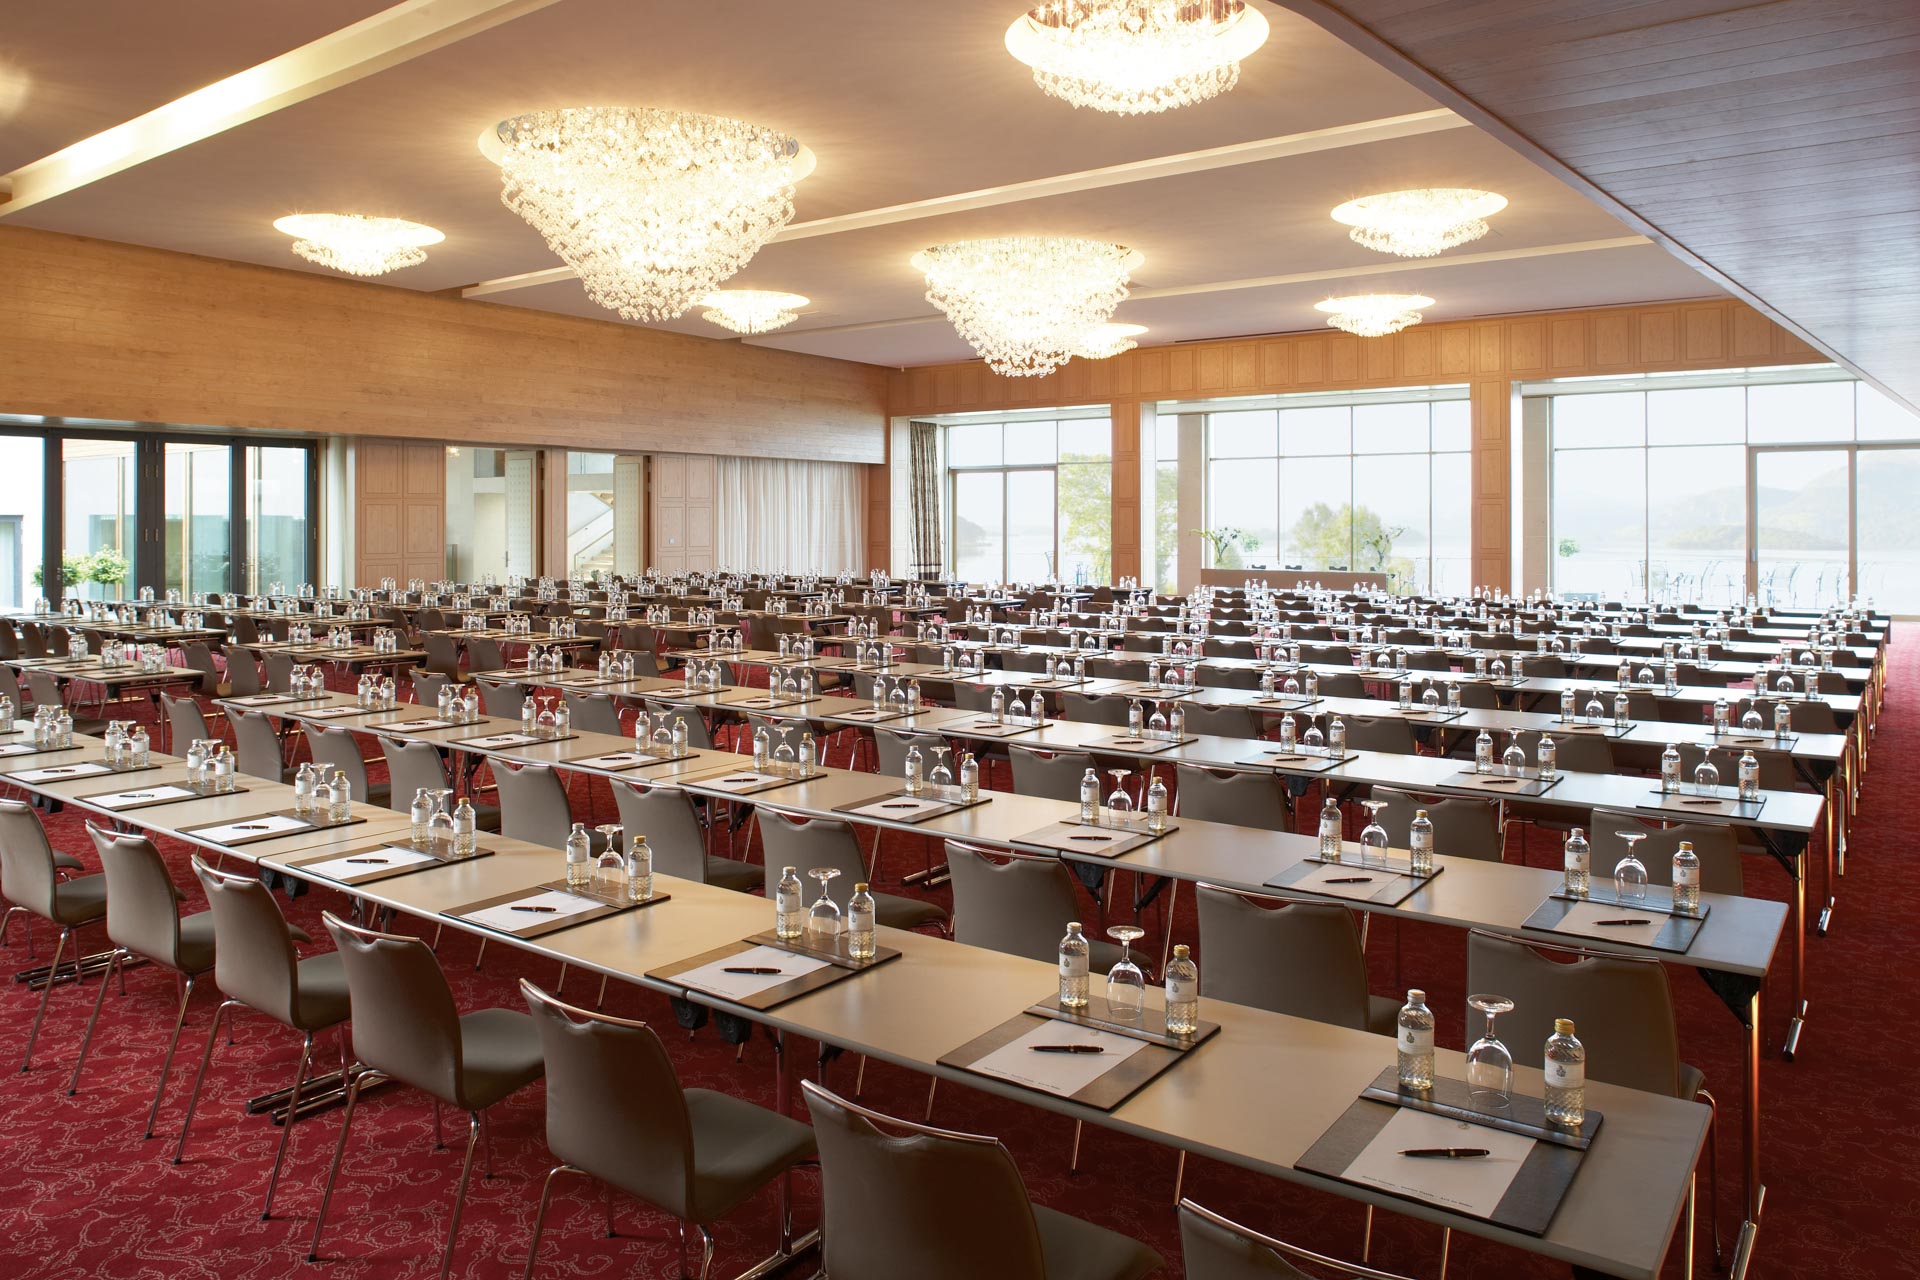 The Europe Hotel & Resort Ballroom Classroom Style from Rear